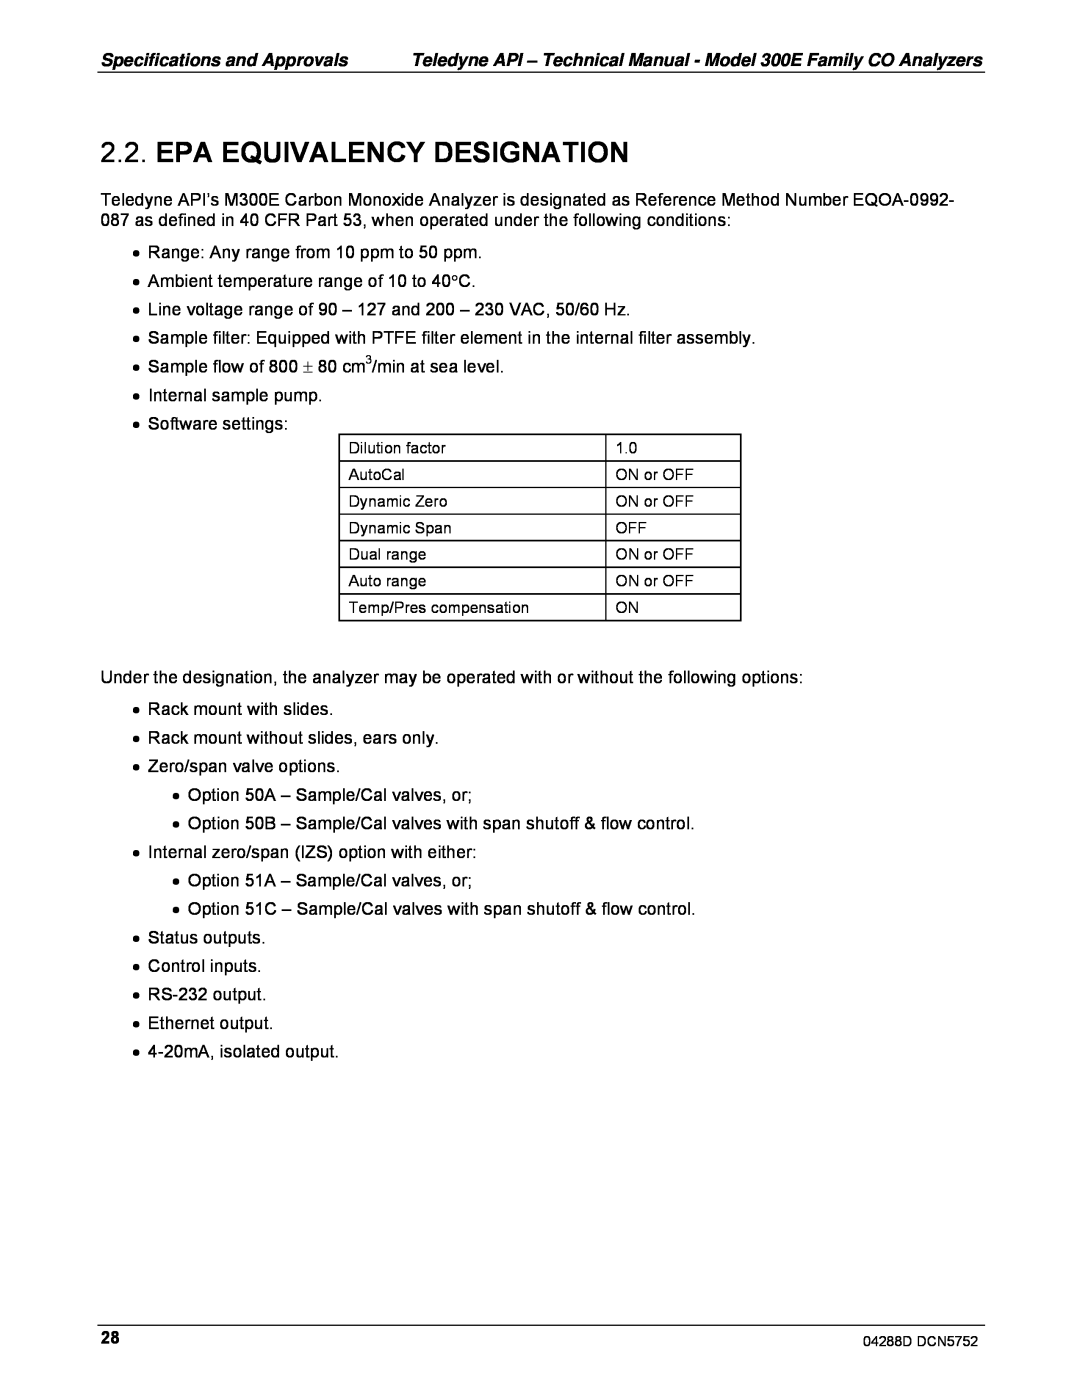 Teledyne M300EM operation manual Epa Equivalency Designation 